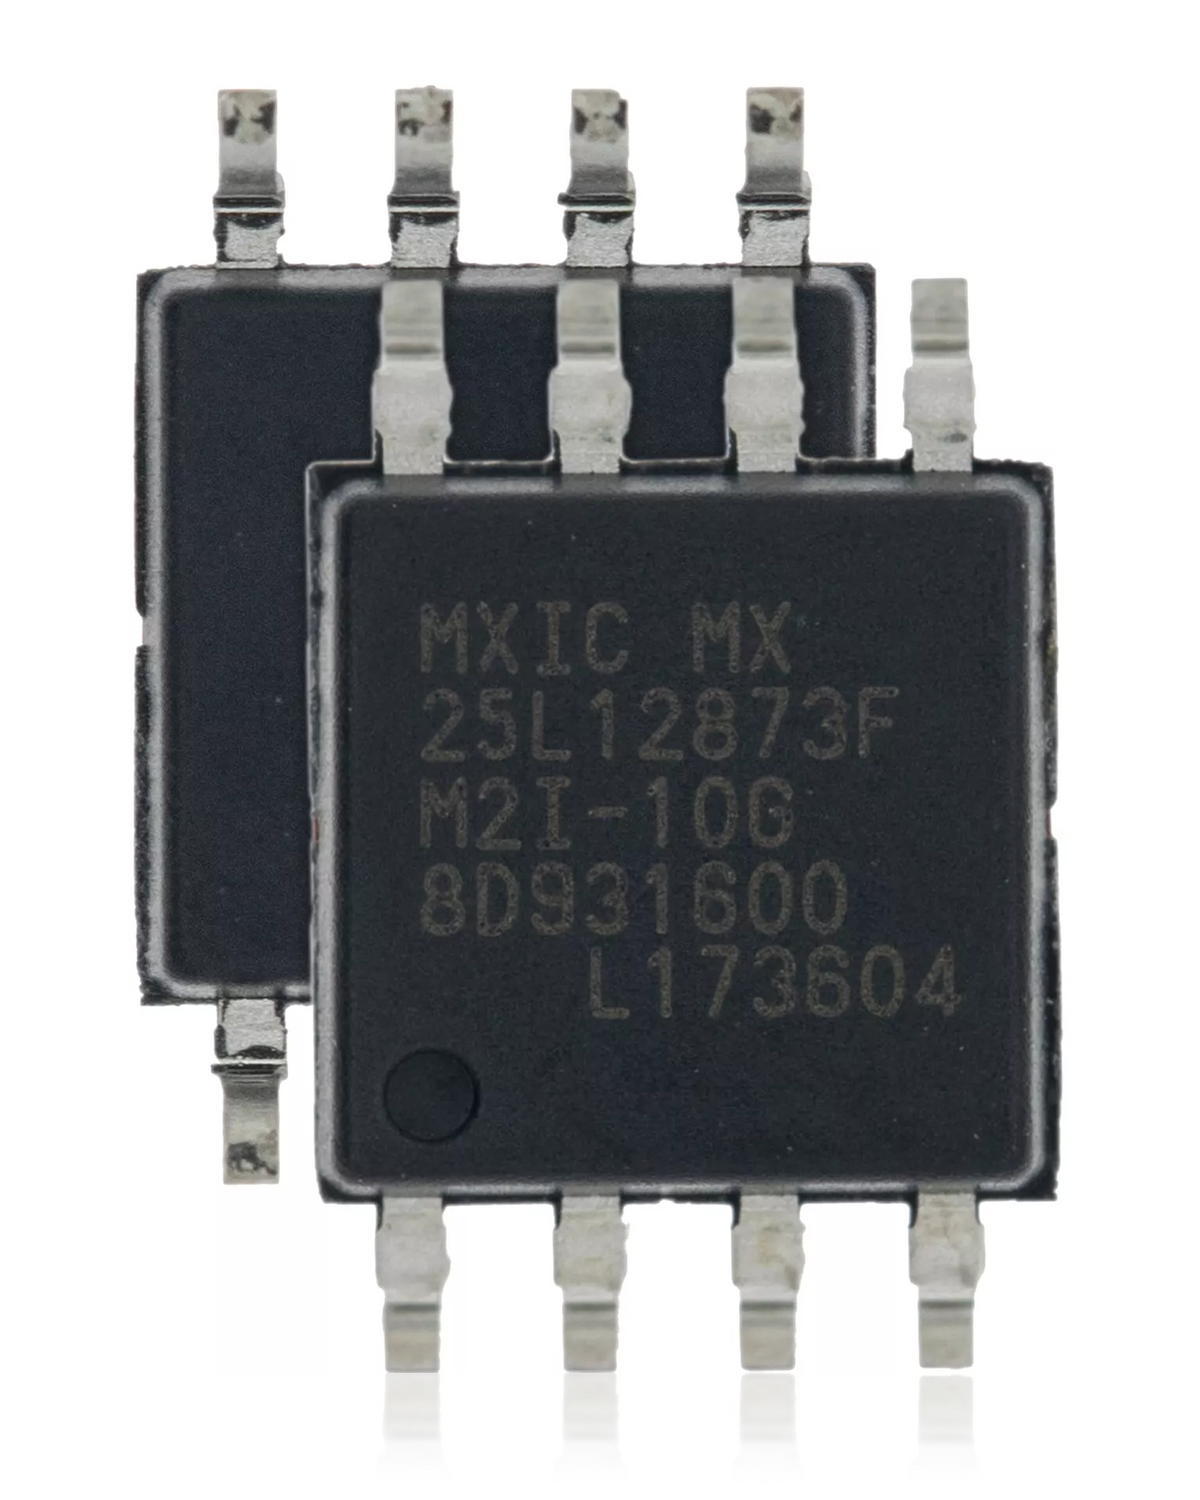 BIOS IC Compatible For MacBooks (Macronix MXIC: MX25L12873F M2I-10G / 25L12873FM2I-10G / MX25L12873F / 25L12873F 16MB: SOP-8 Pin)